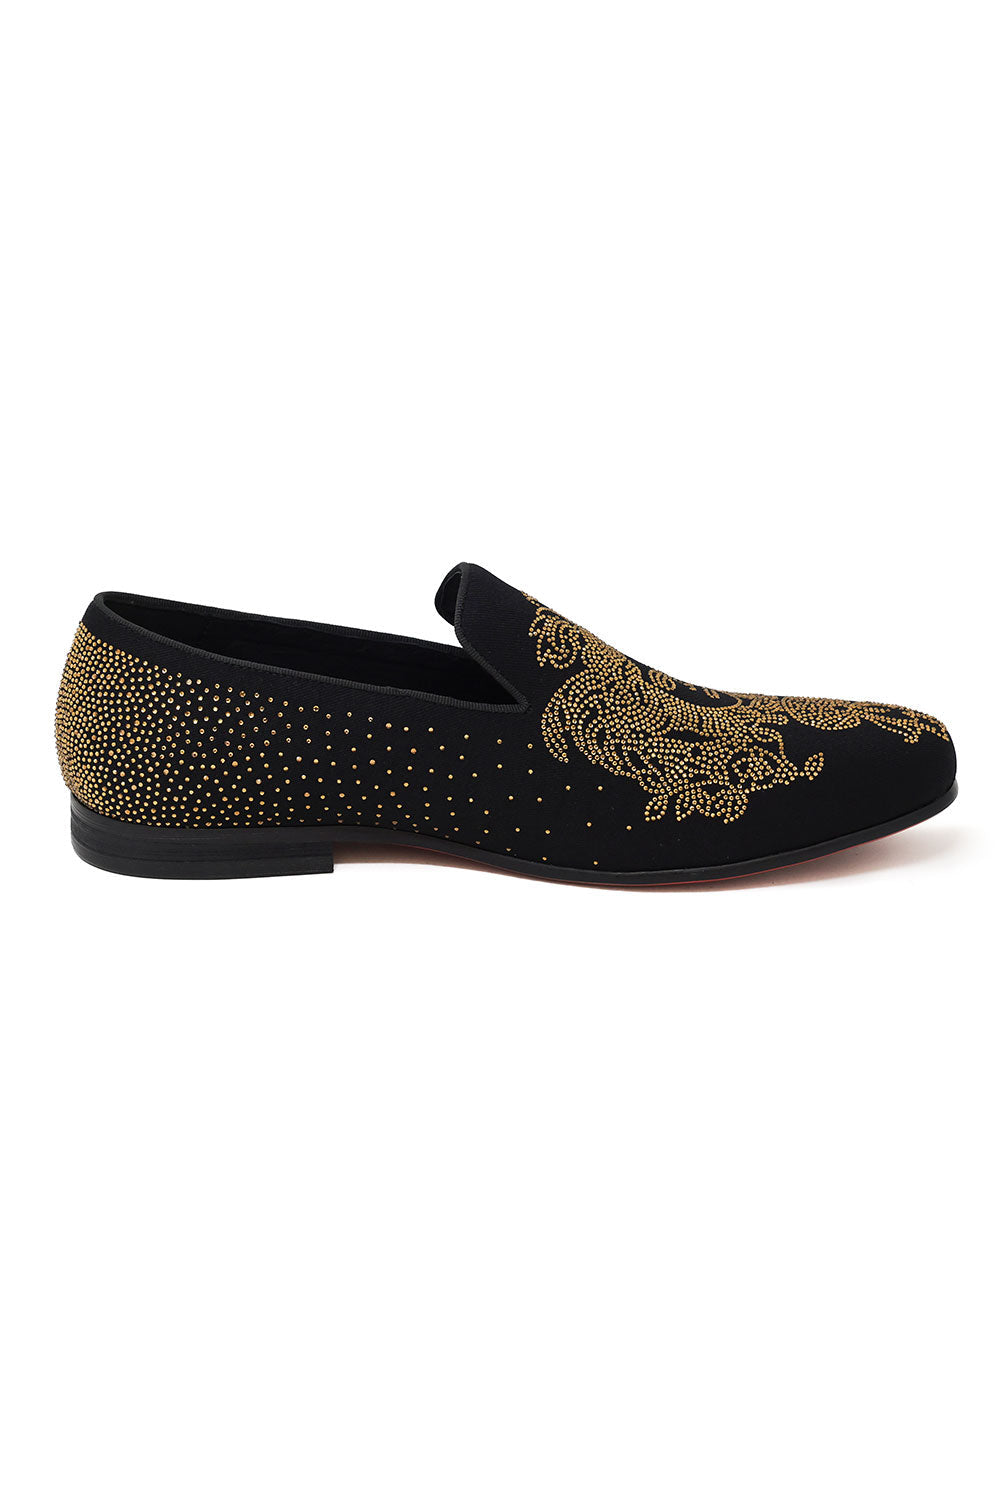 BARABAS Men's Medusa Rhinestone Jewels Slip On Dress Shoes 2SHR12 Gold